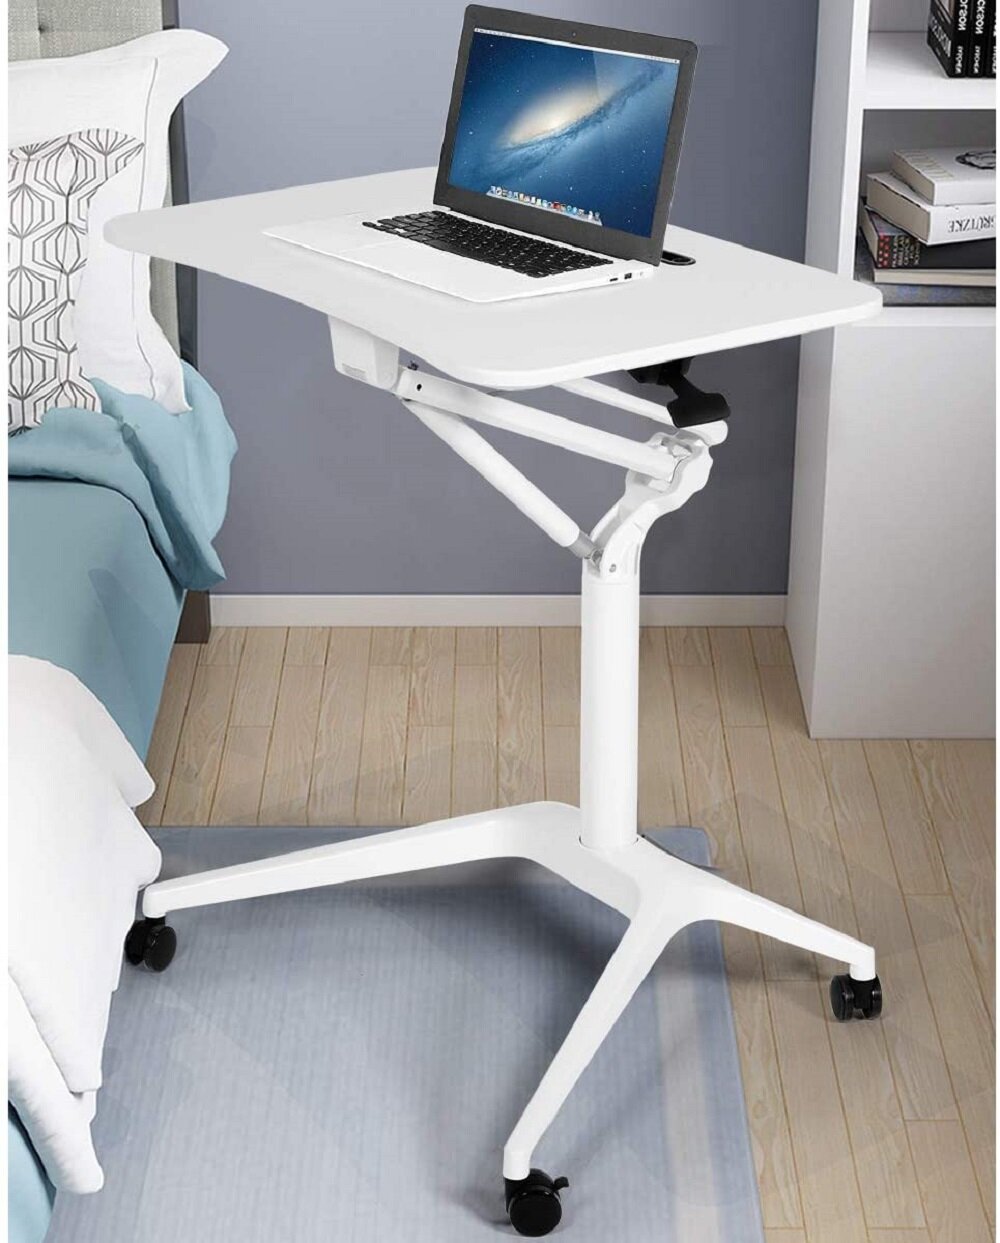 Adjustable Height Stand Computer Desk Ergonomic Workstation Lift Rising Laptop 